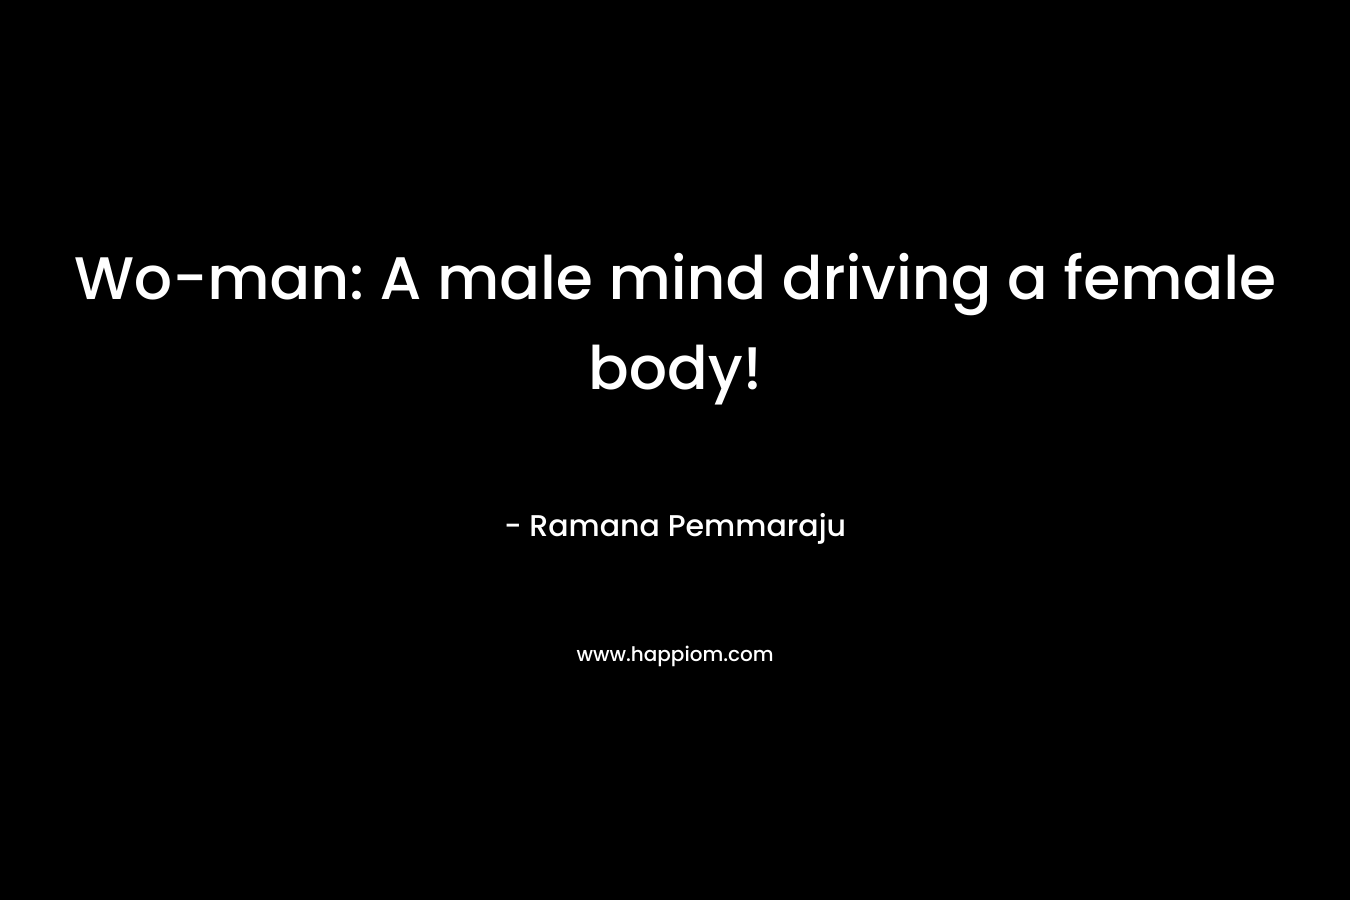 Wo-man: A male mind driving a female body!